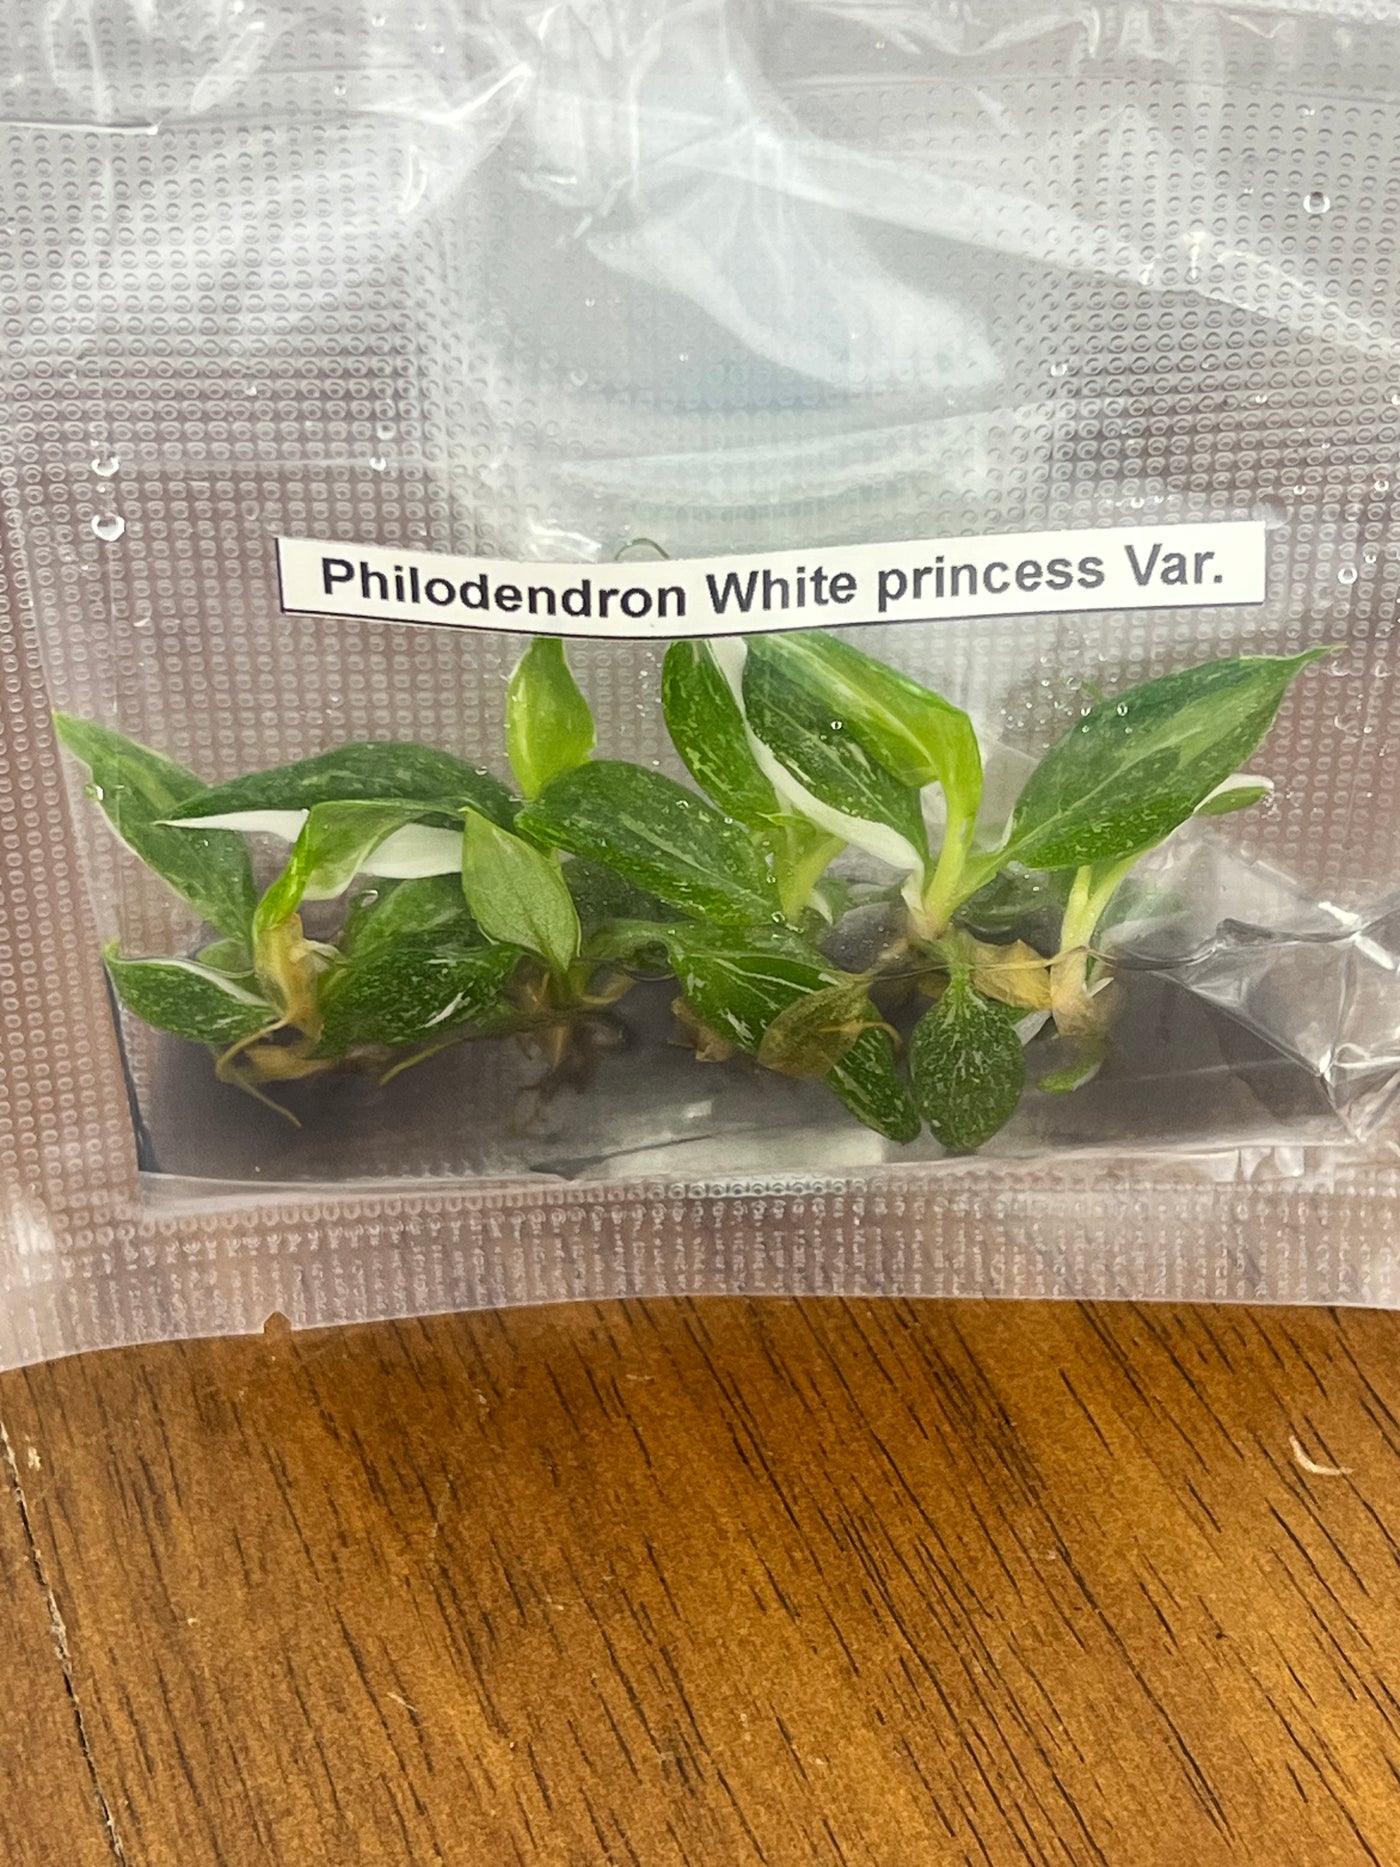 Philodendron White Princess Plantlets (5)